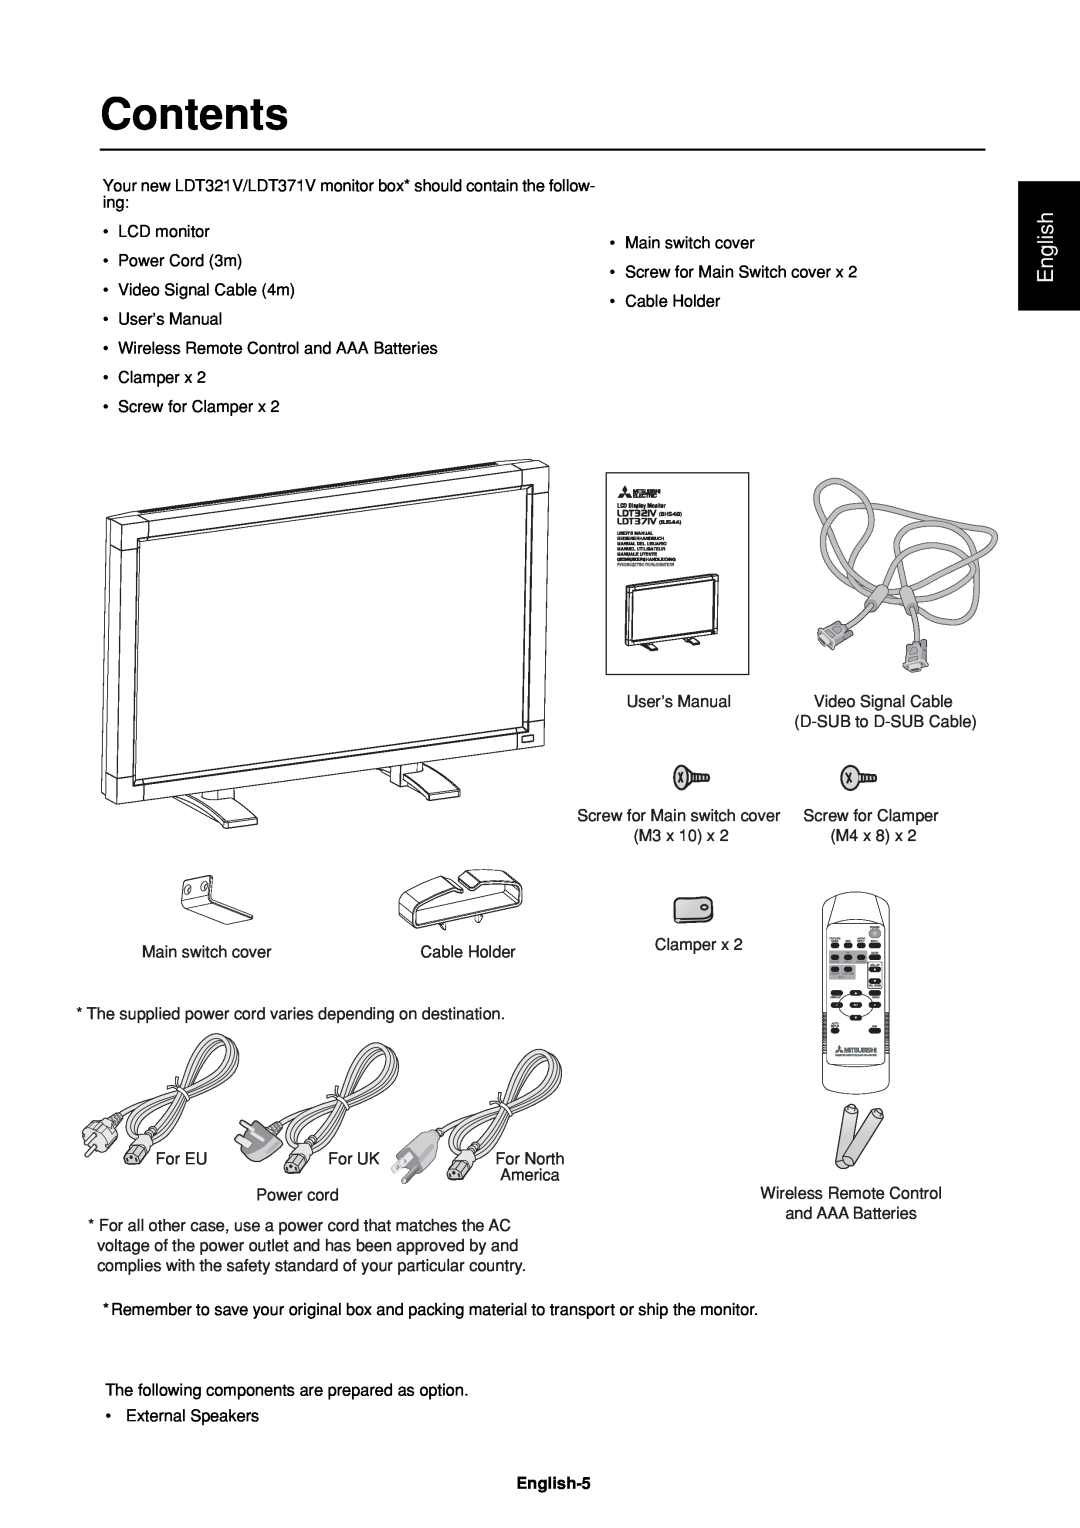 Mitsubishi Electronics LDT37IV (BH544), LDT32IV (BH548) manual Contents, English-5 